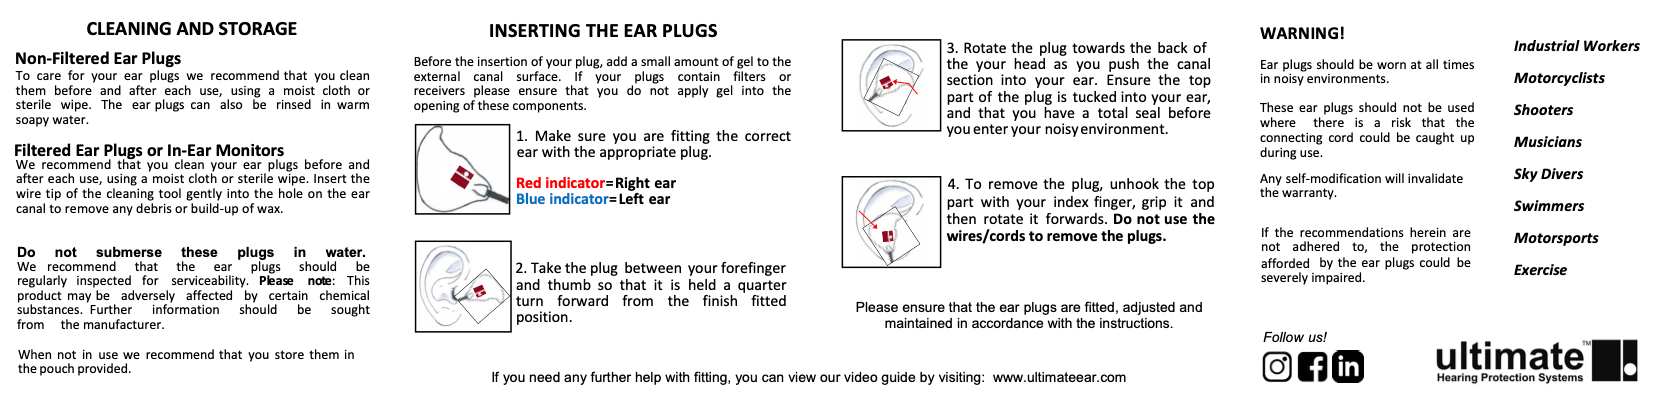 Ultimate Ear fitting guide back